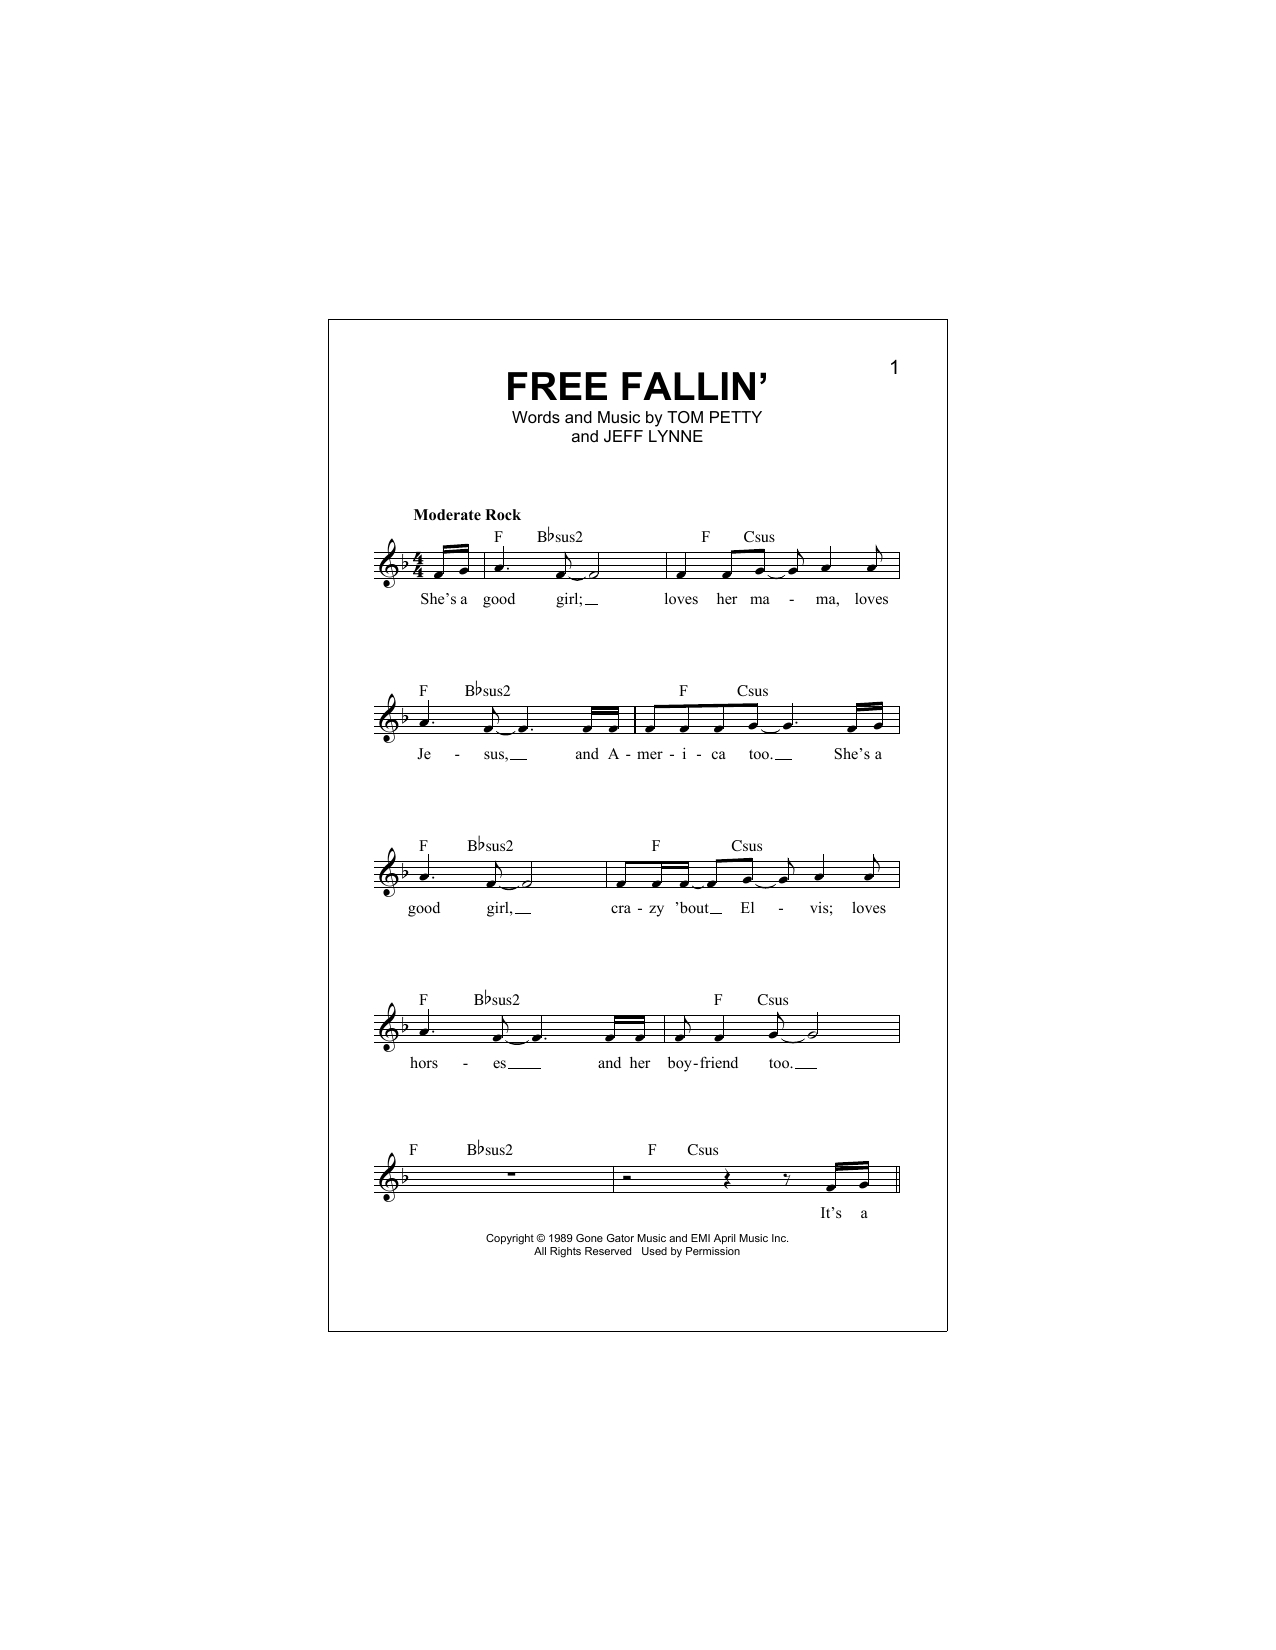 Free Fallin Chords Sheet Music Digital Files To Print Licensed Jeff Lynne Digital